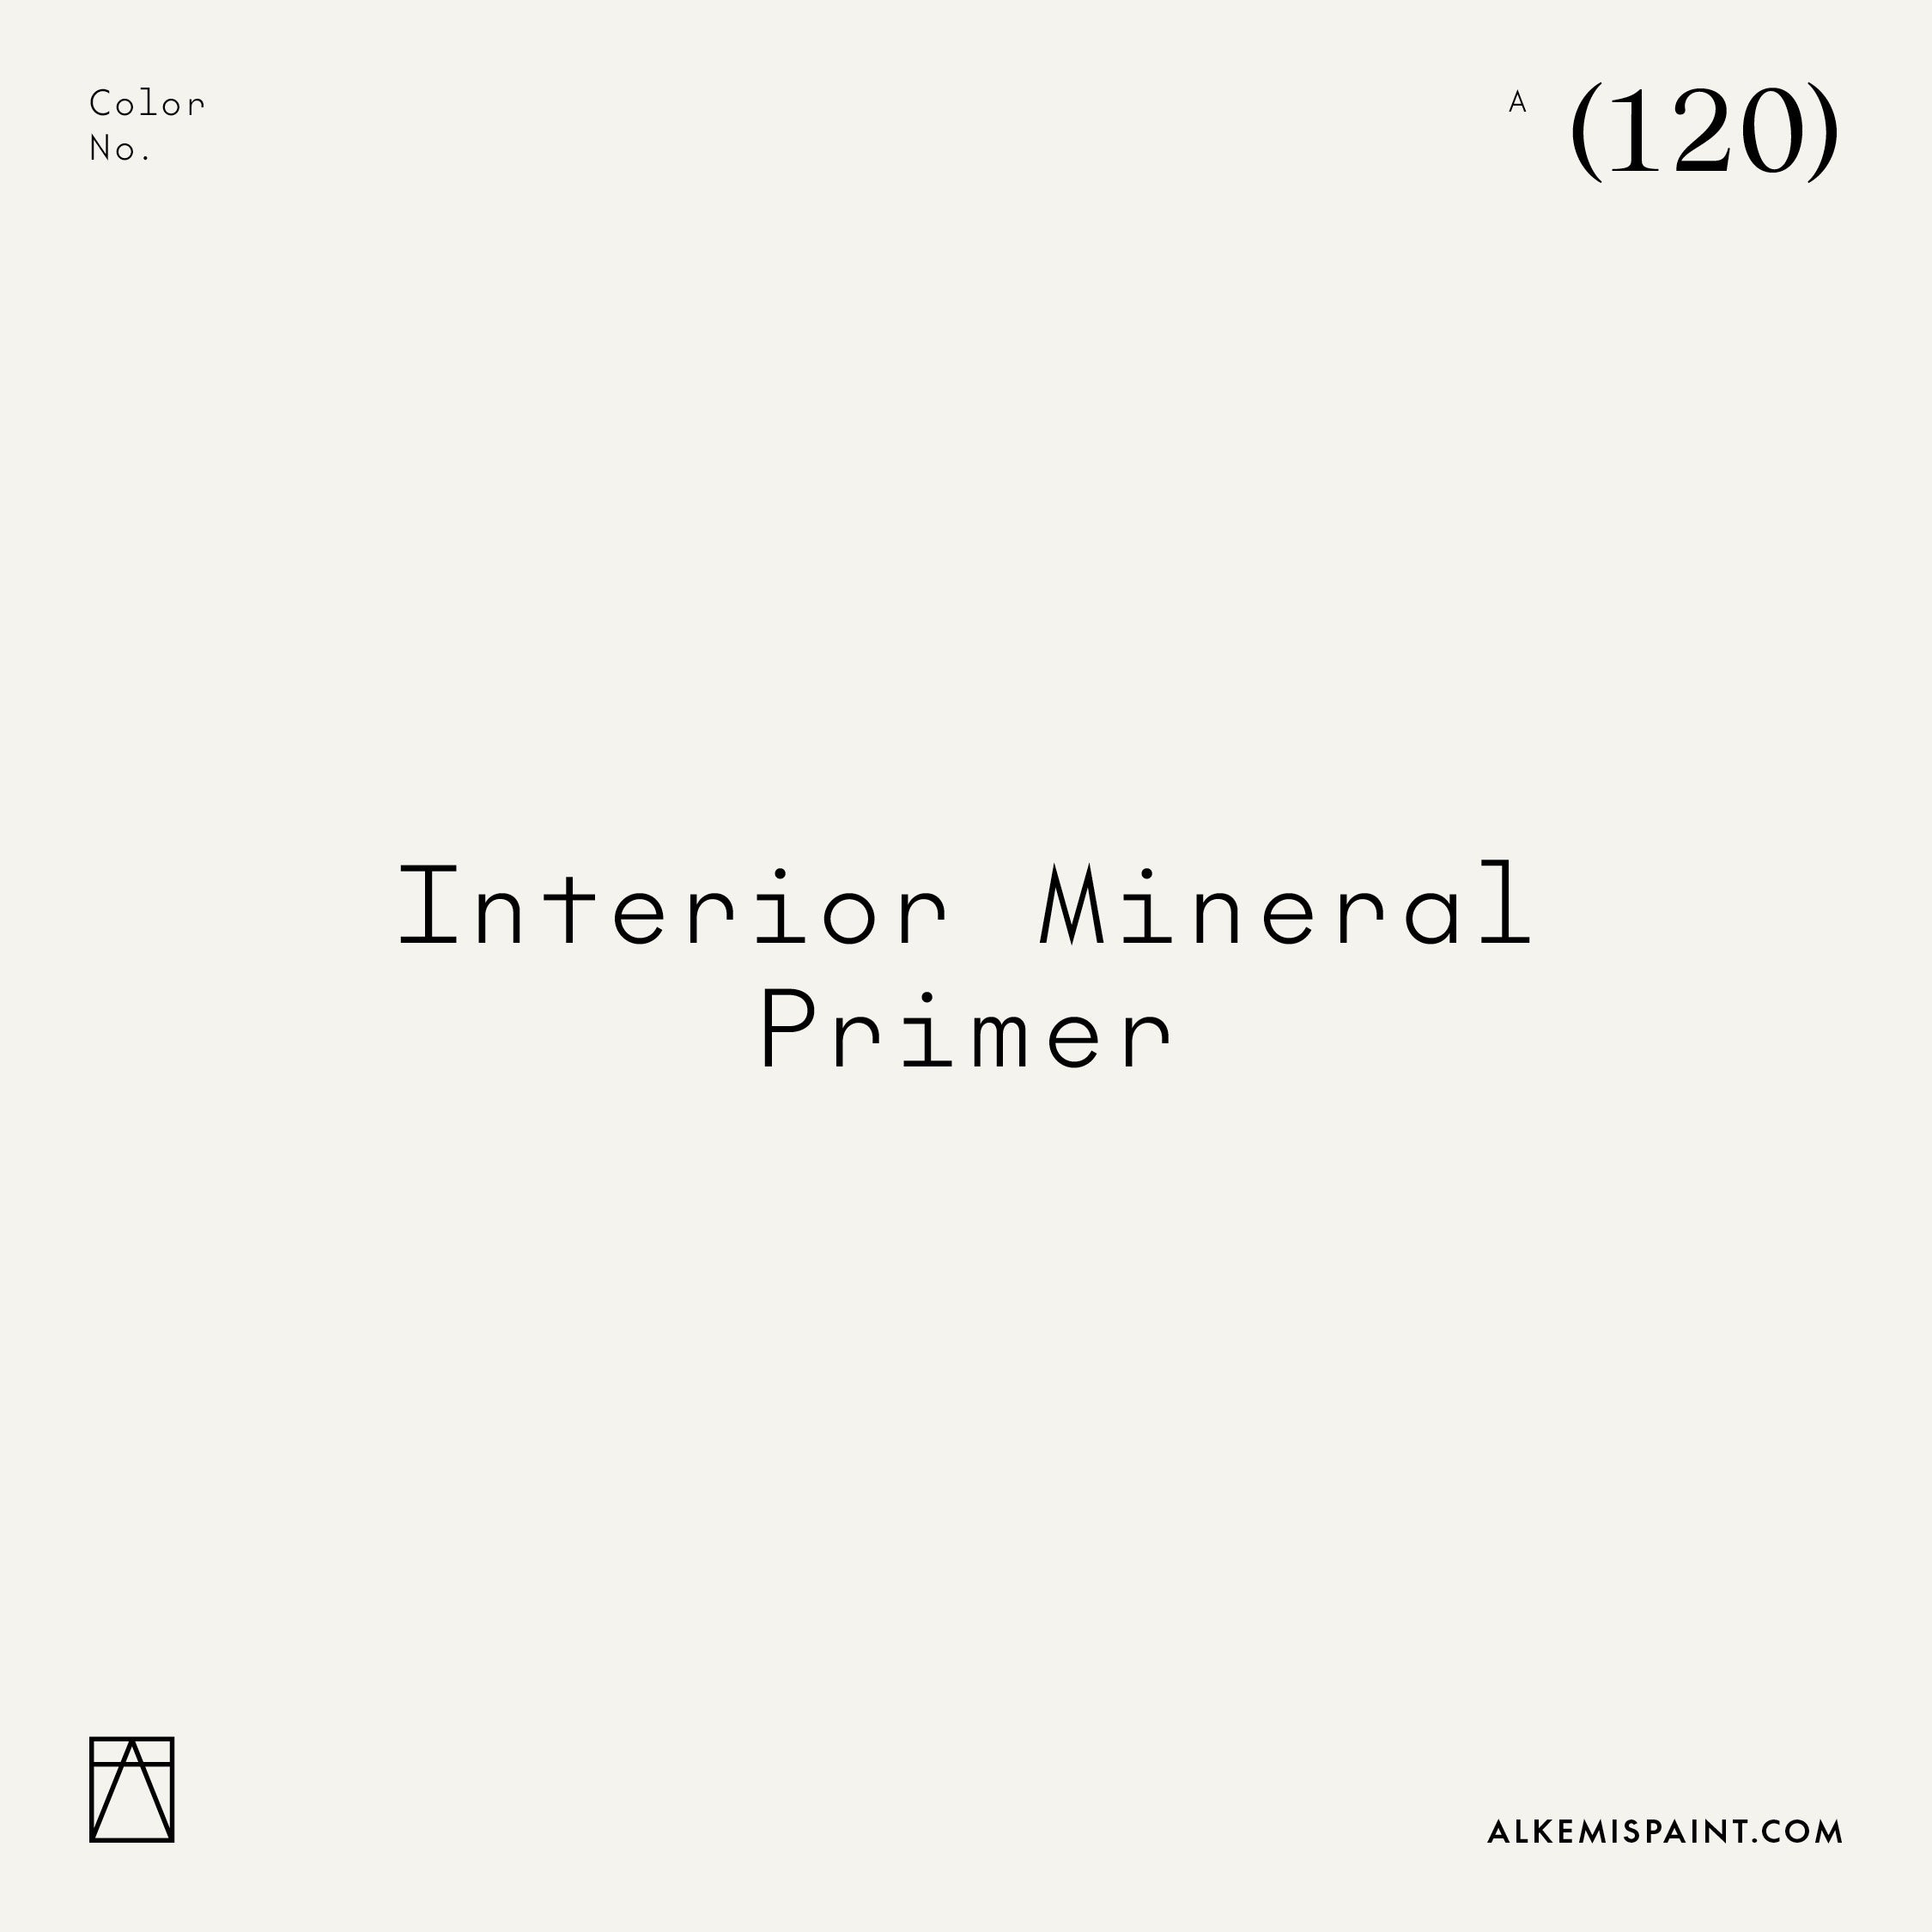 Interior Mineral Primer (120)